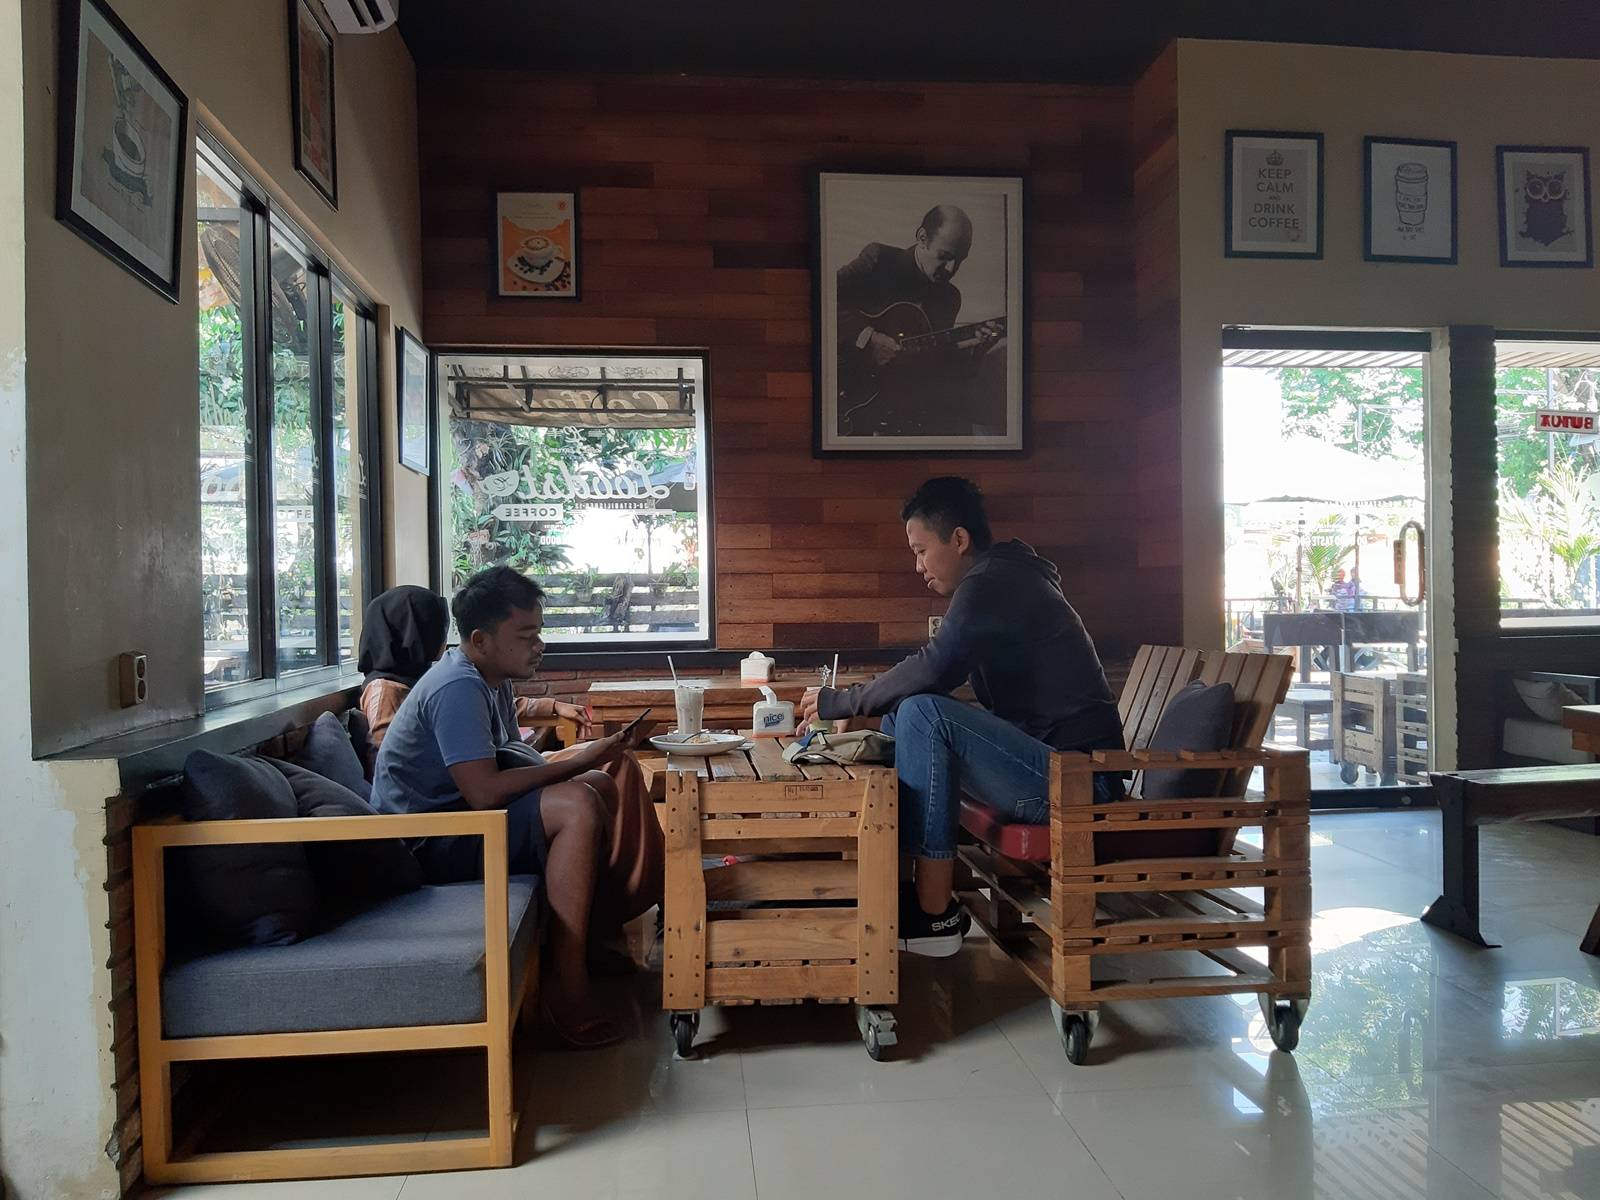 Suasana Cafe yang Nyaman dan Bikin Betah (c) Mei Indriani/Travelingyuk